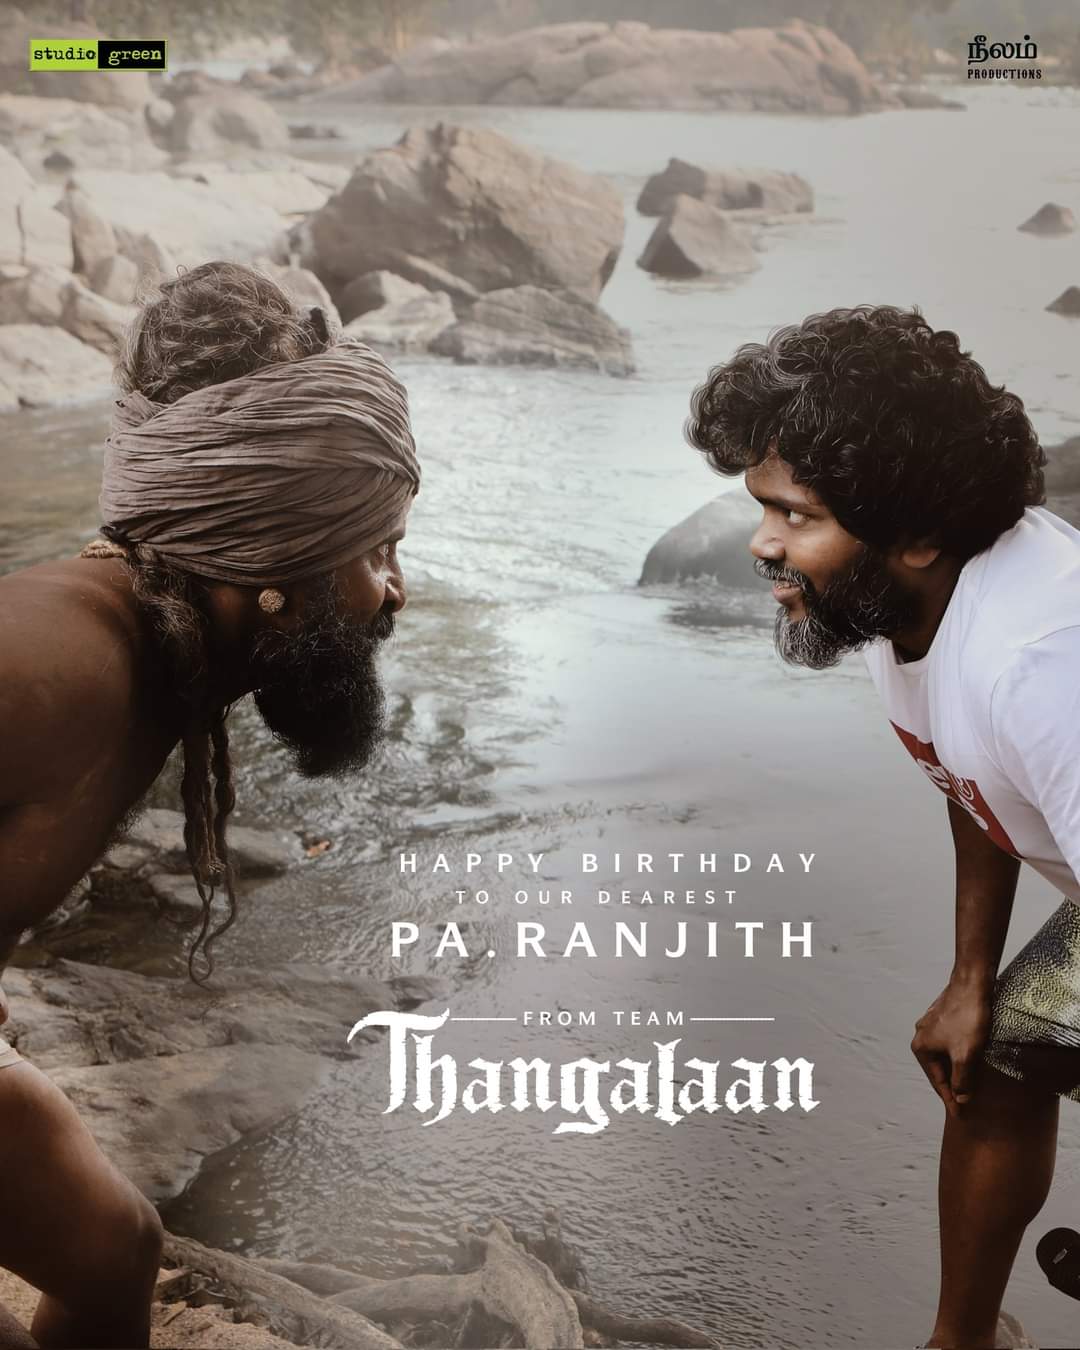 Pa Ranjith Birthday Vikram Thangalaan Movie New BTS Poster 